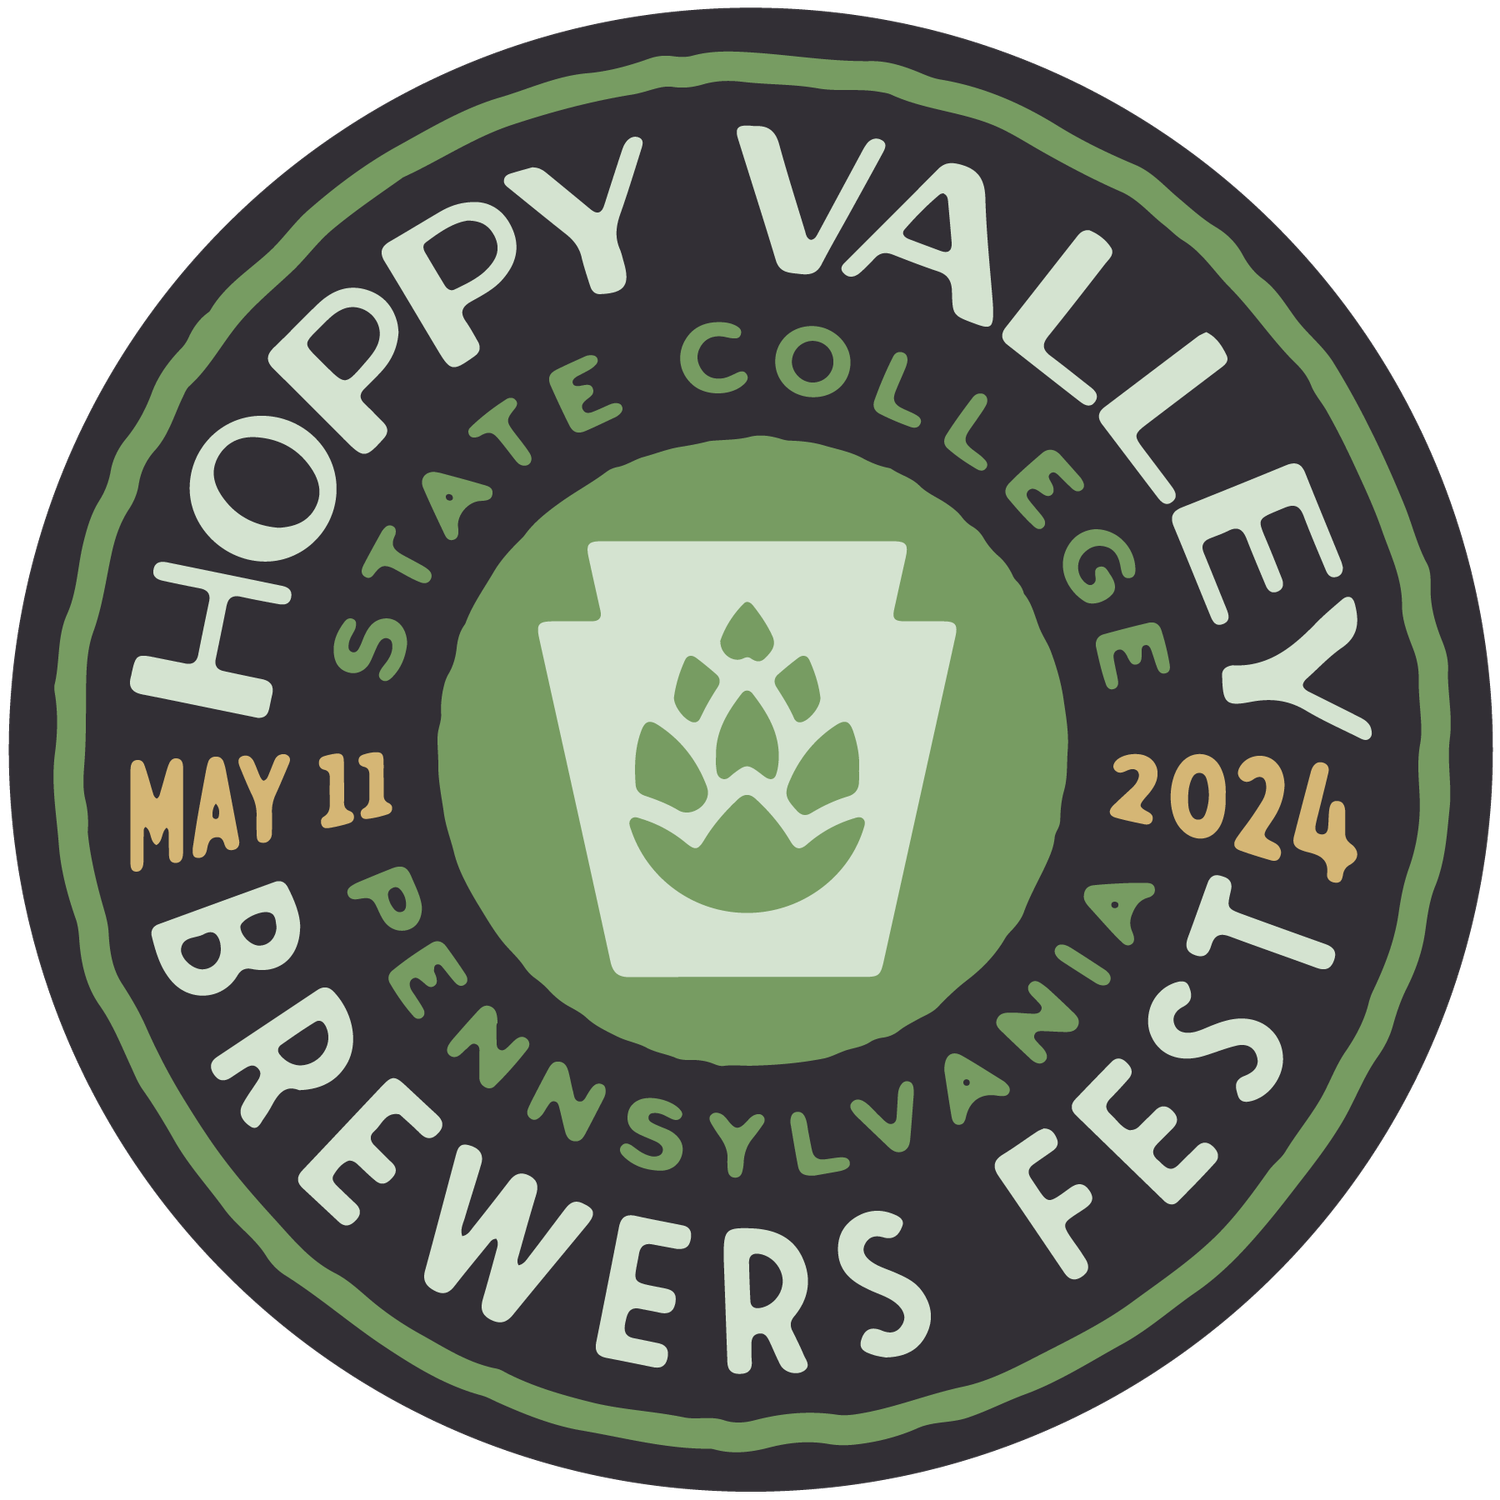 Hoppy Valley Brewers Fest